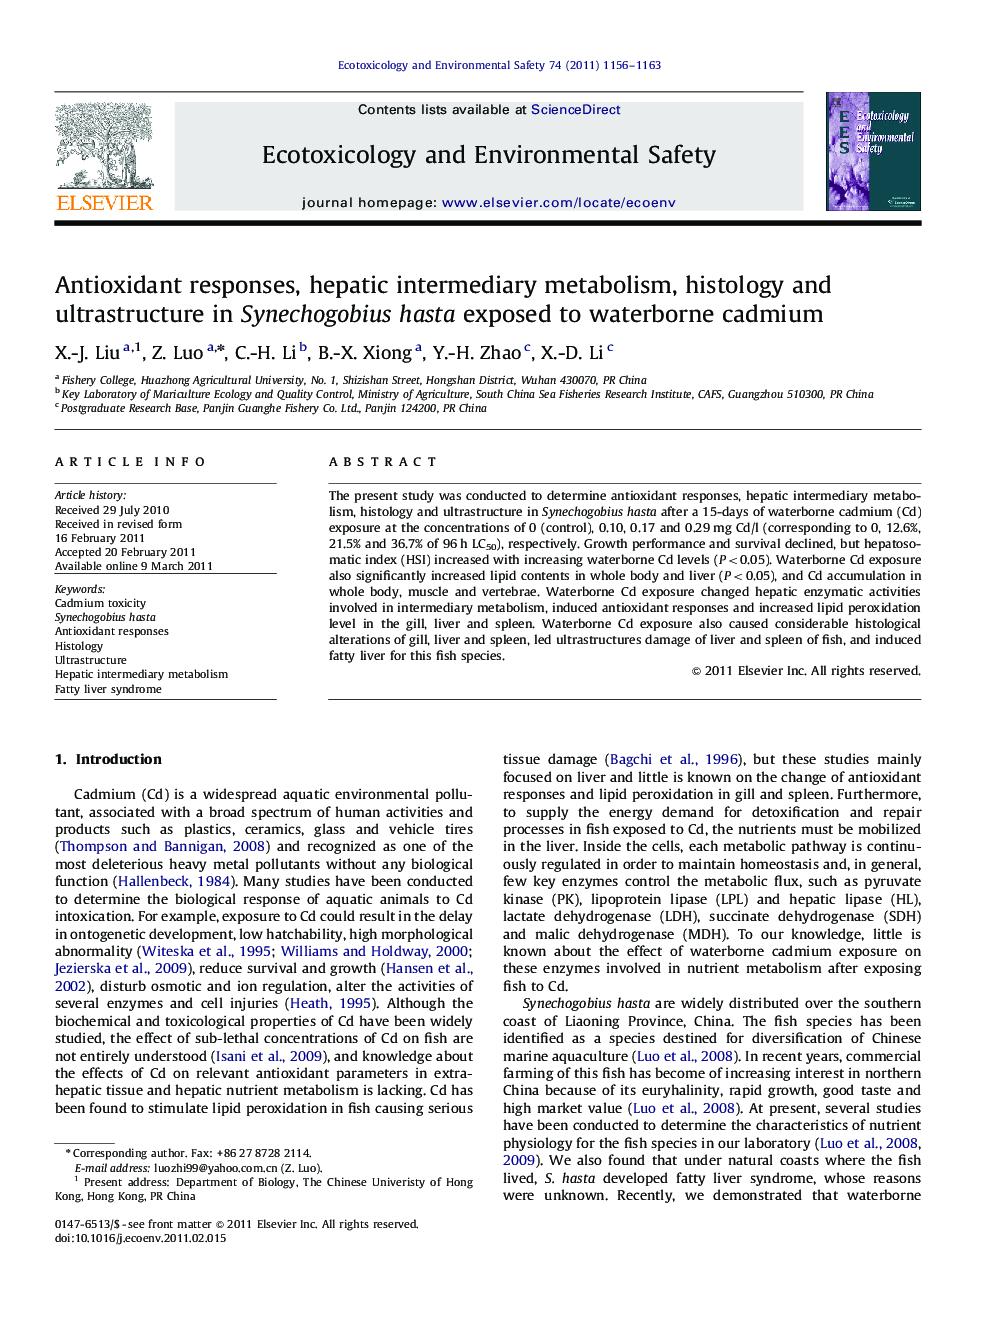 Antioxidant responses, hepatic intermediary metabolism, histology and ultrastructure in Synechogobius hasta exposed to waterborne cadmium